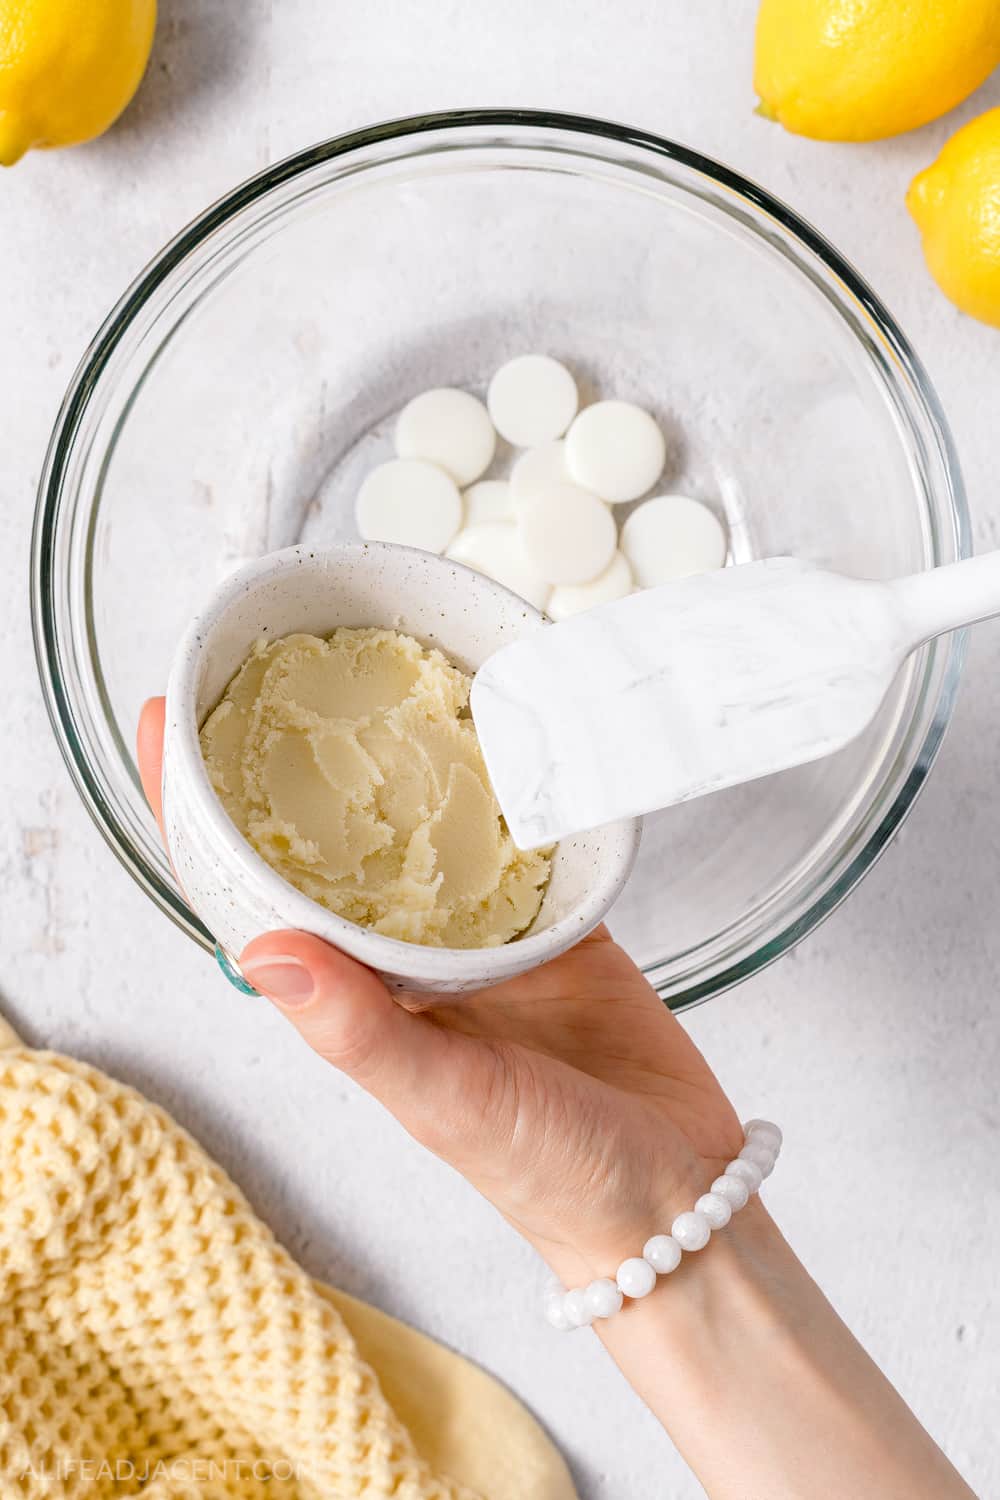 Adding shea butter to homemade body cream.